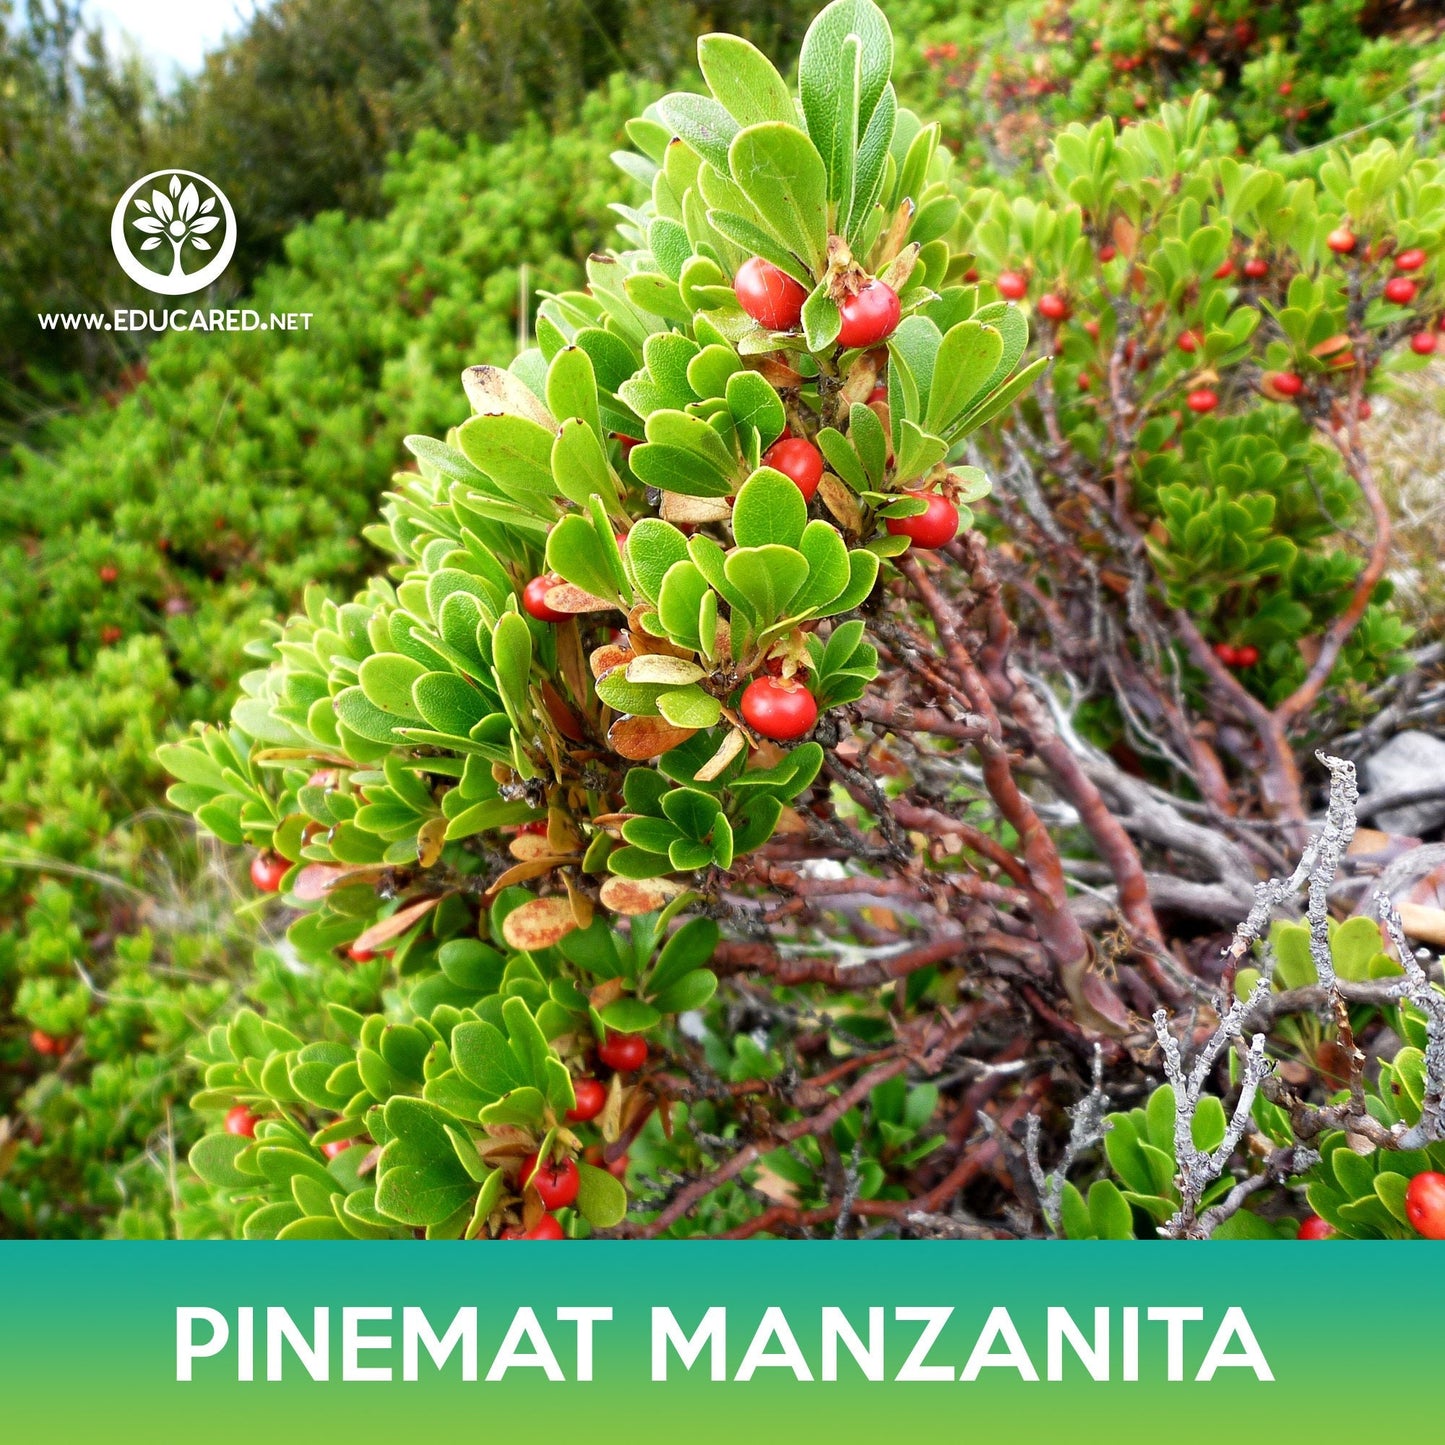 Pinemat Manzanita Groundcover Seeds, Arctostaphylos nevadensis